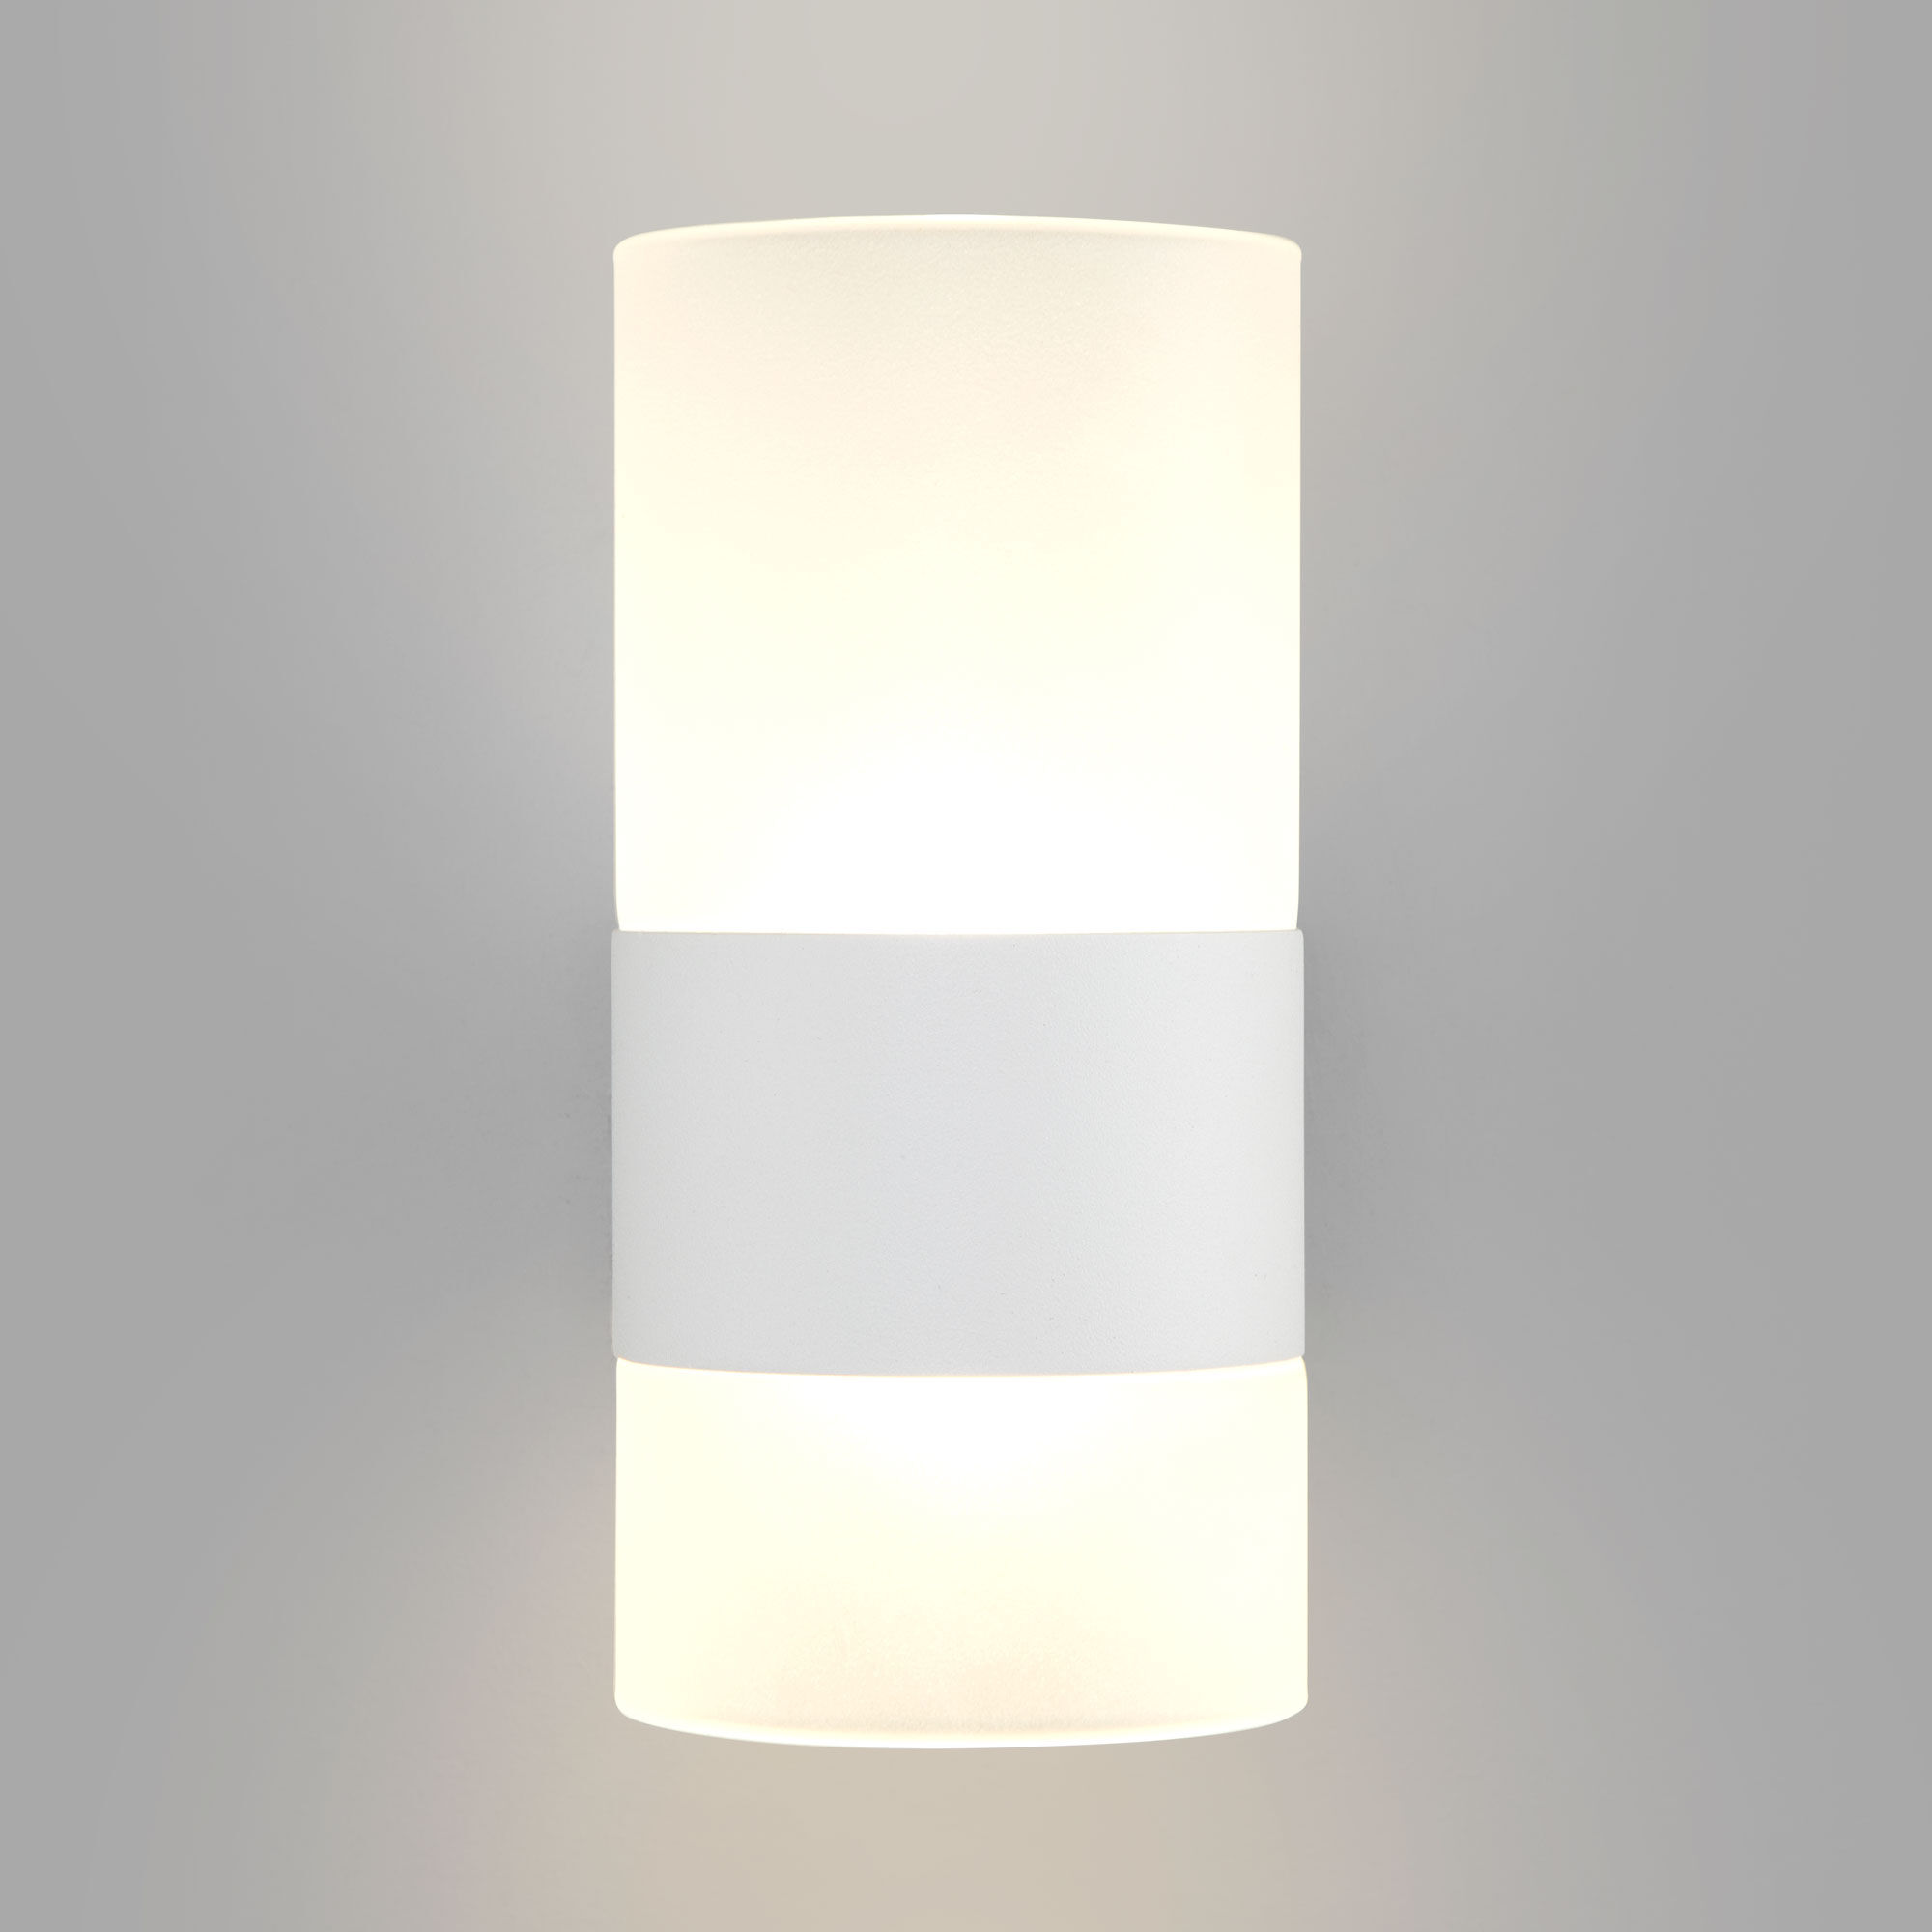  Eurosvet 40021/1 LED настенный светильник белый/матовый